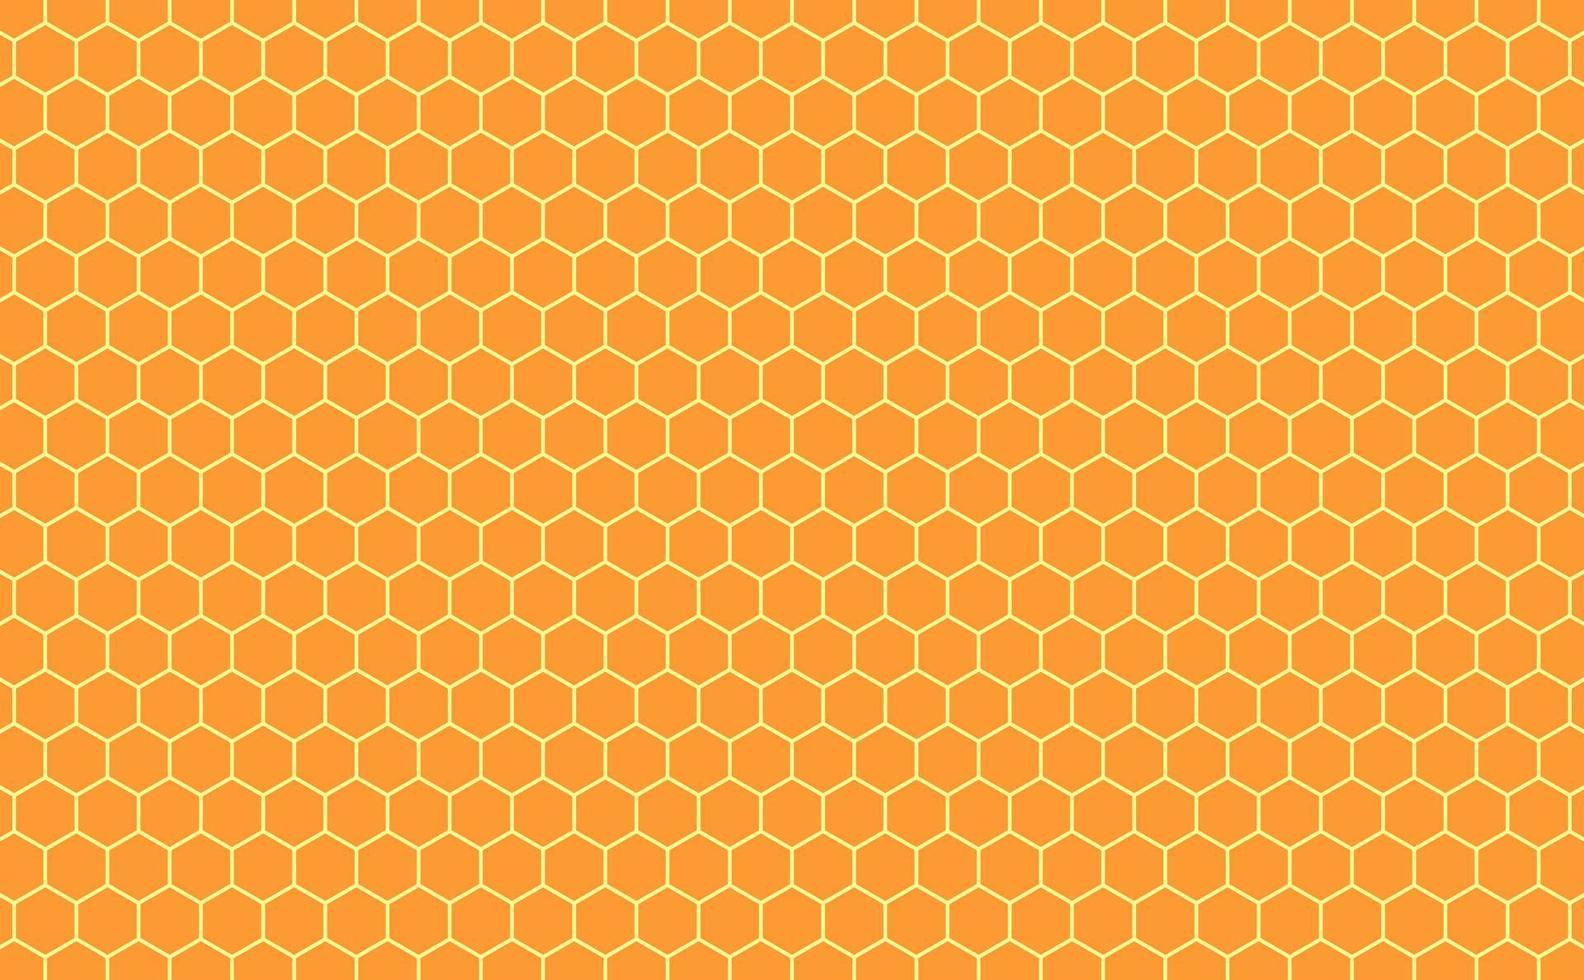 Bienenstock-Muster-Hintergrund vektor